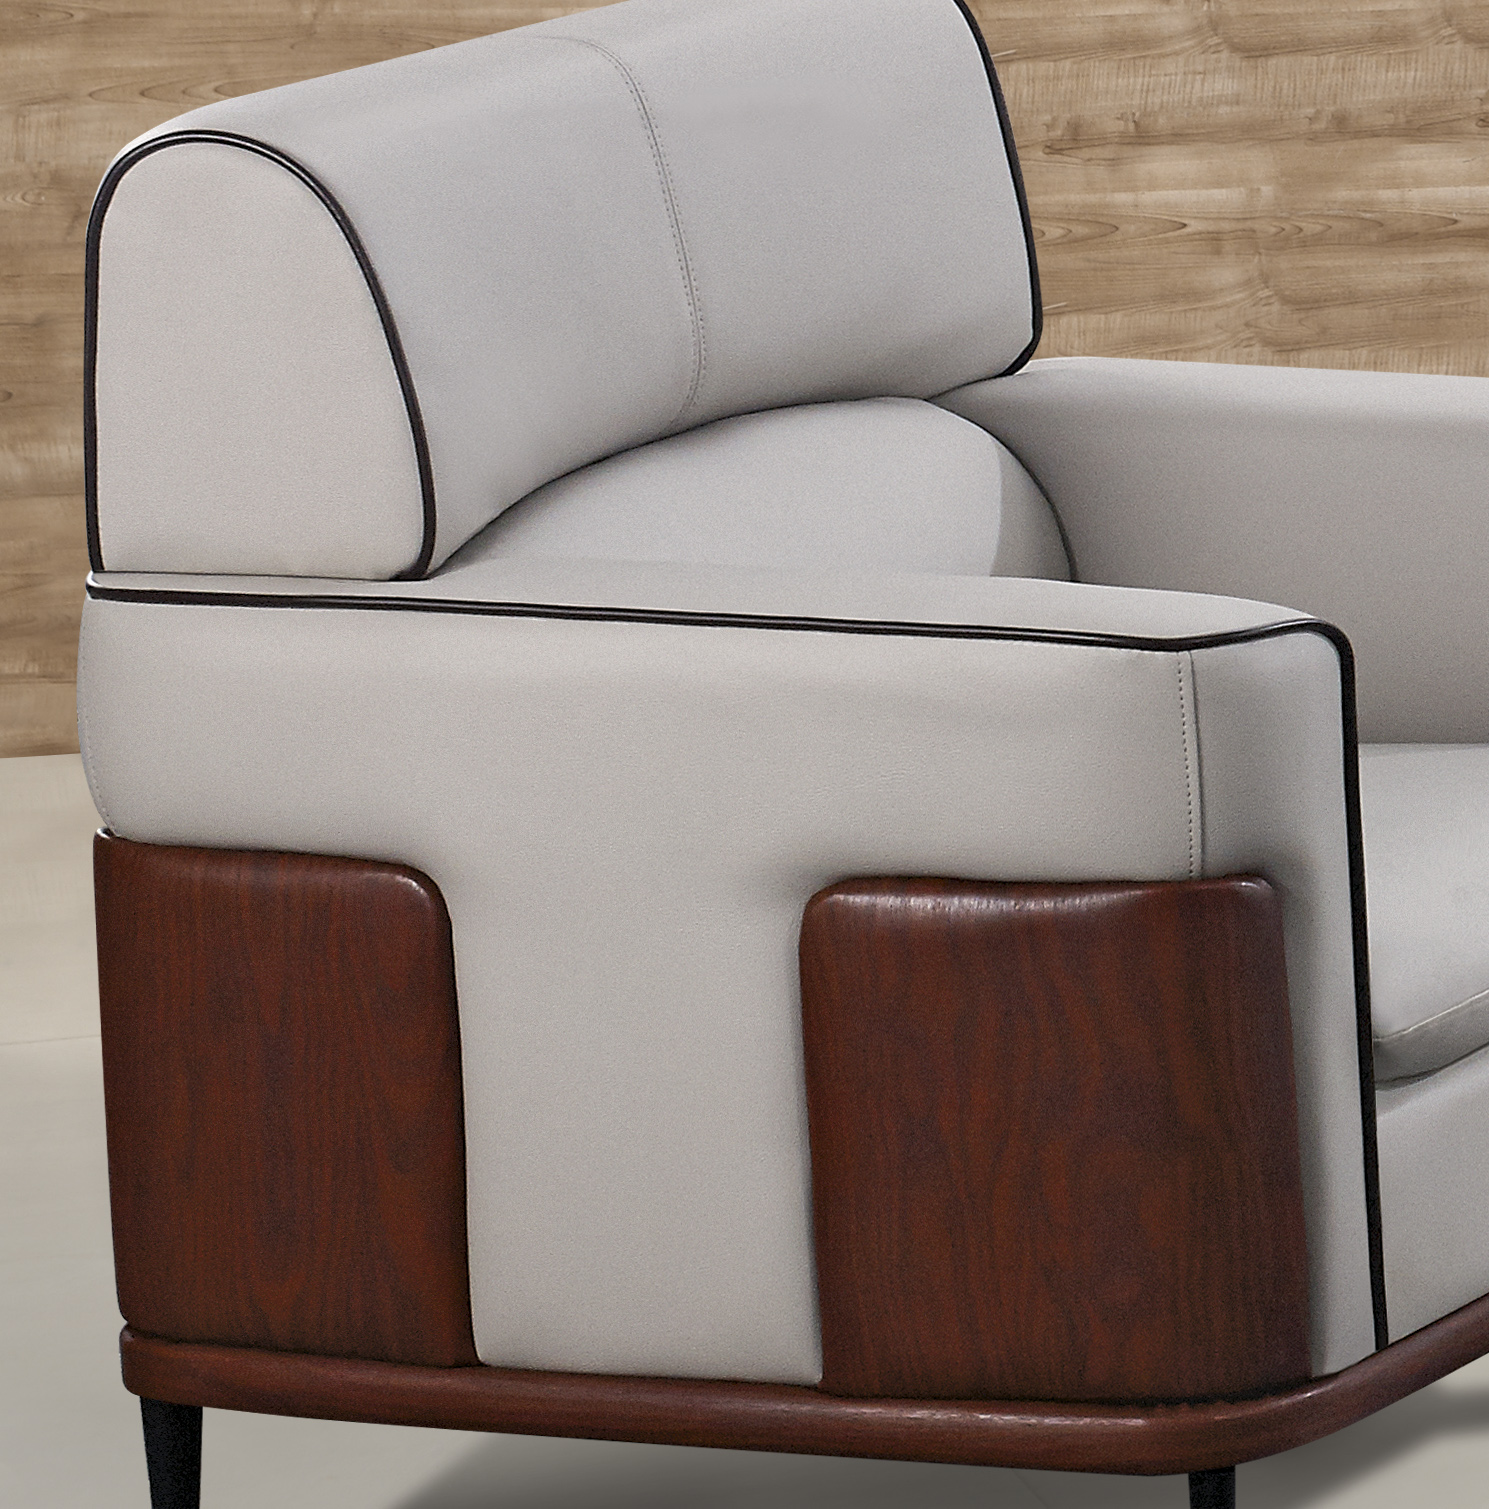 2021 classic leather sofa european modern office sofa W9999